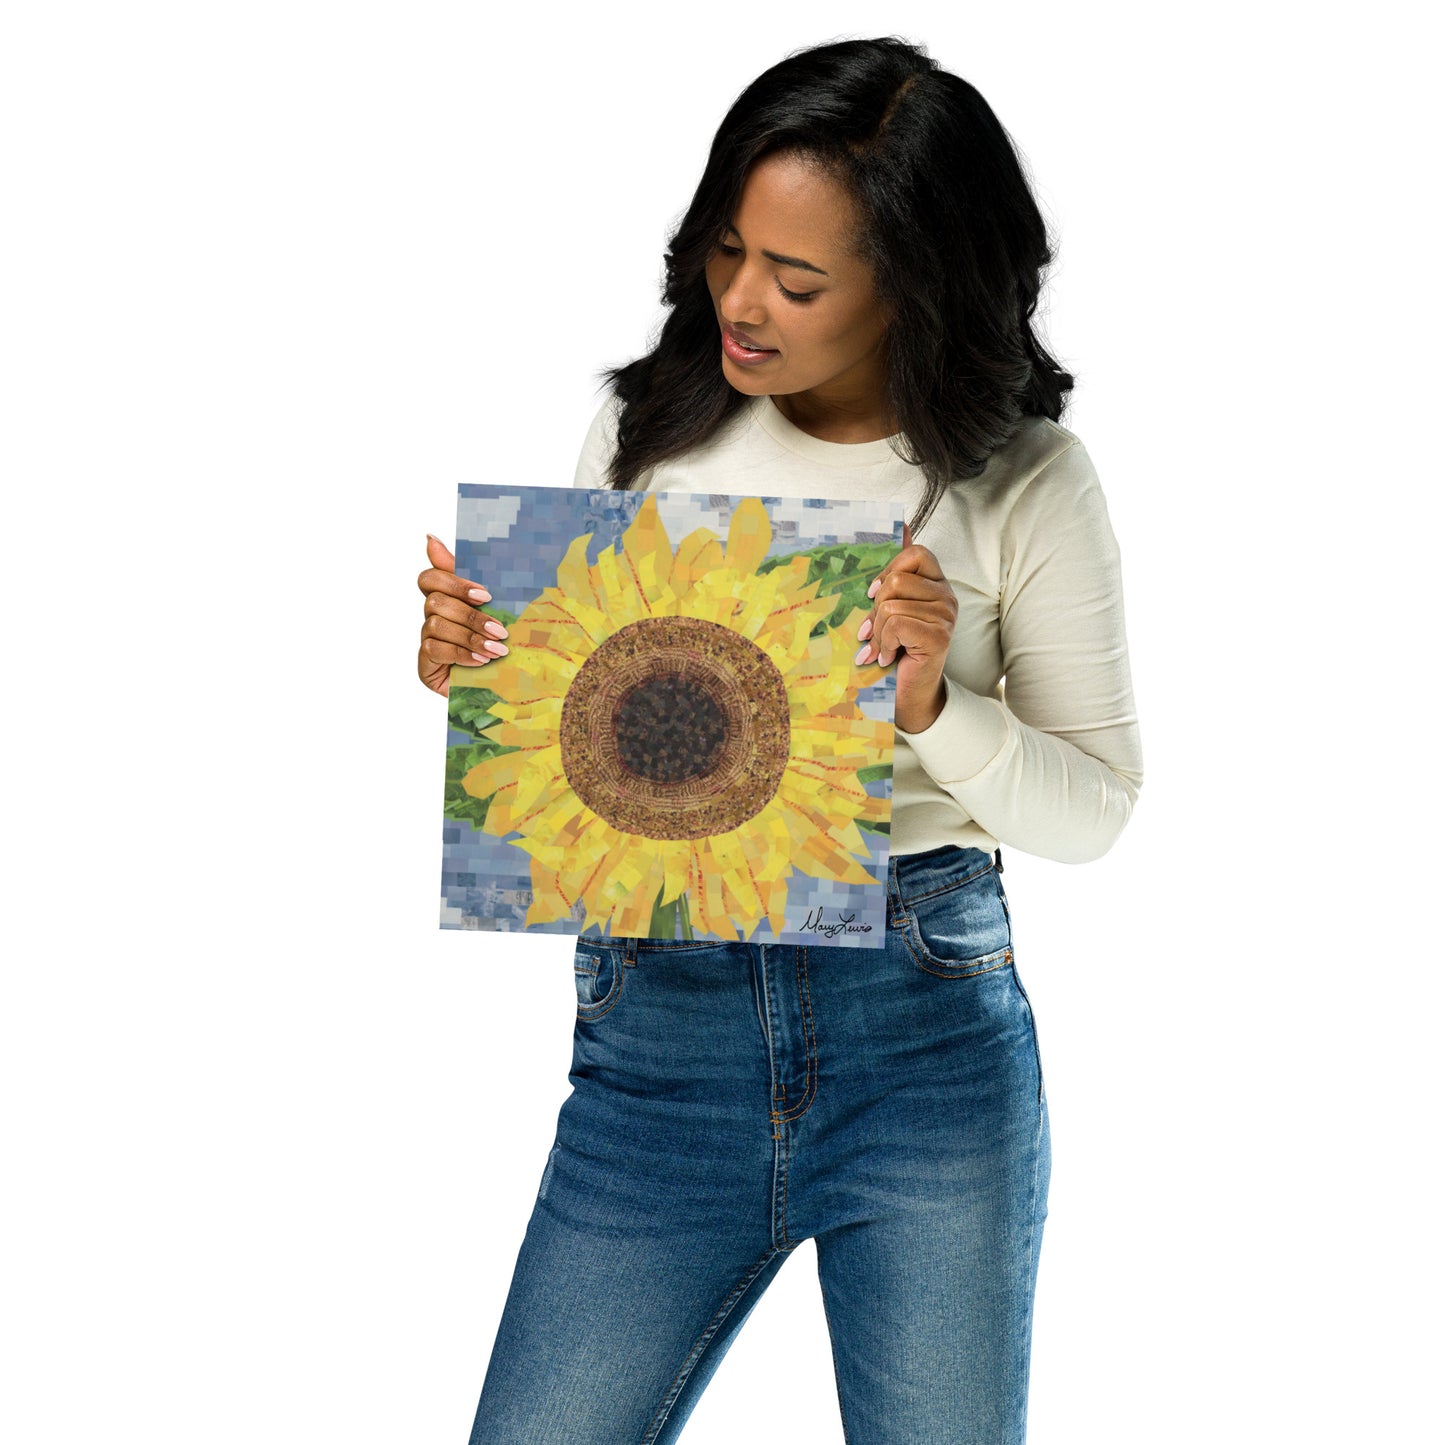 Soaring Sunflower Print 10x10"